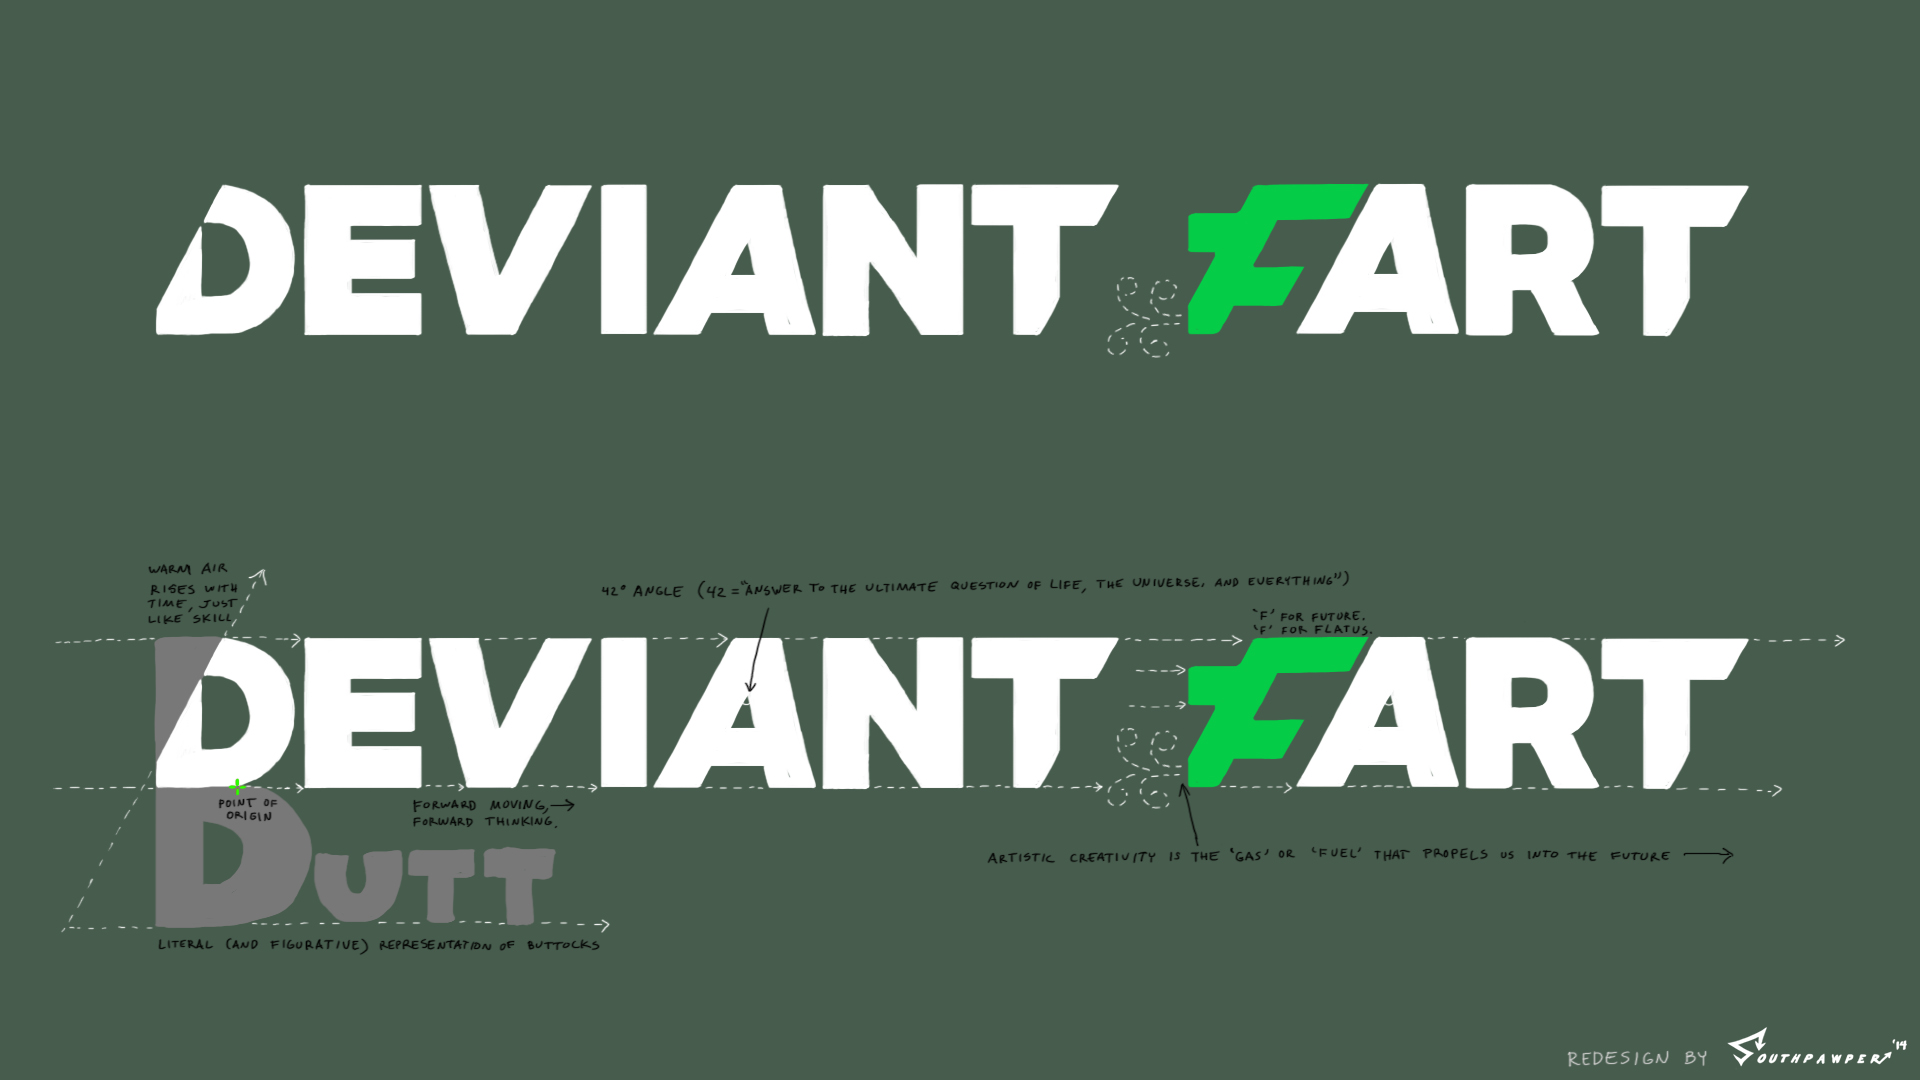 deviantart_logo_redesign_by_southpawper-d8926gp.jpg